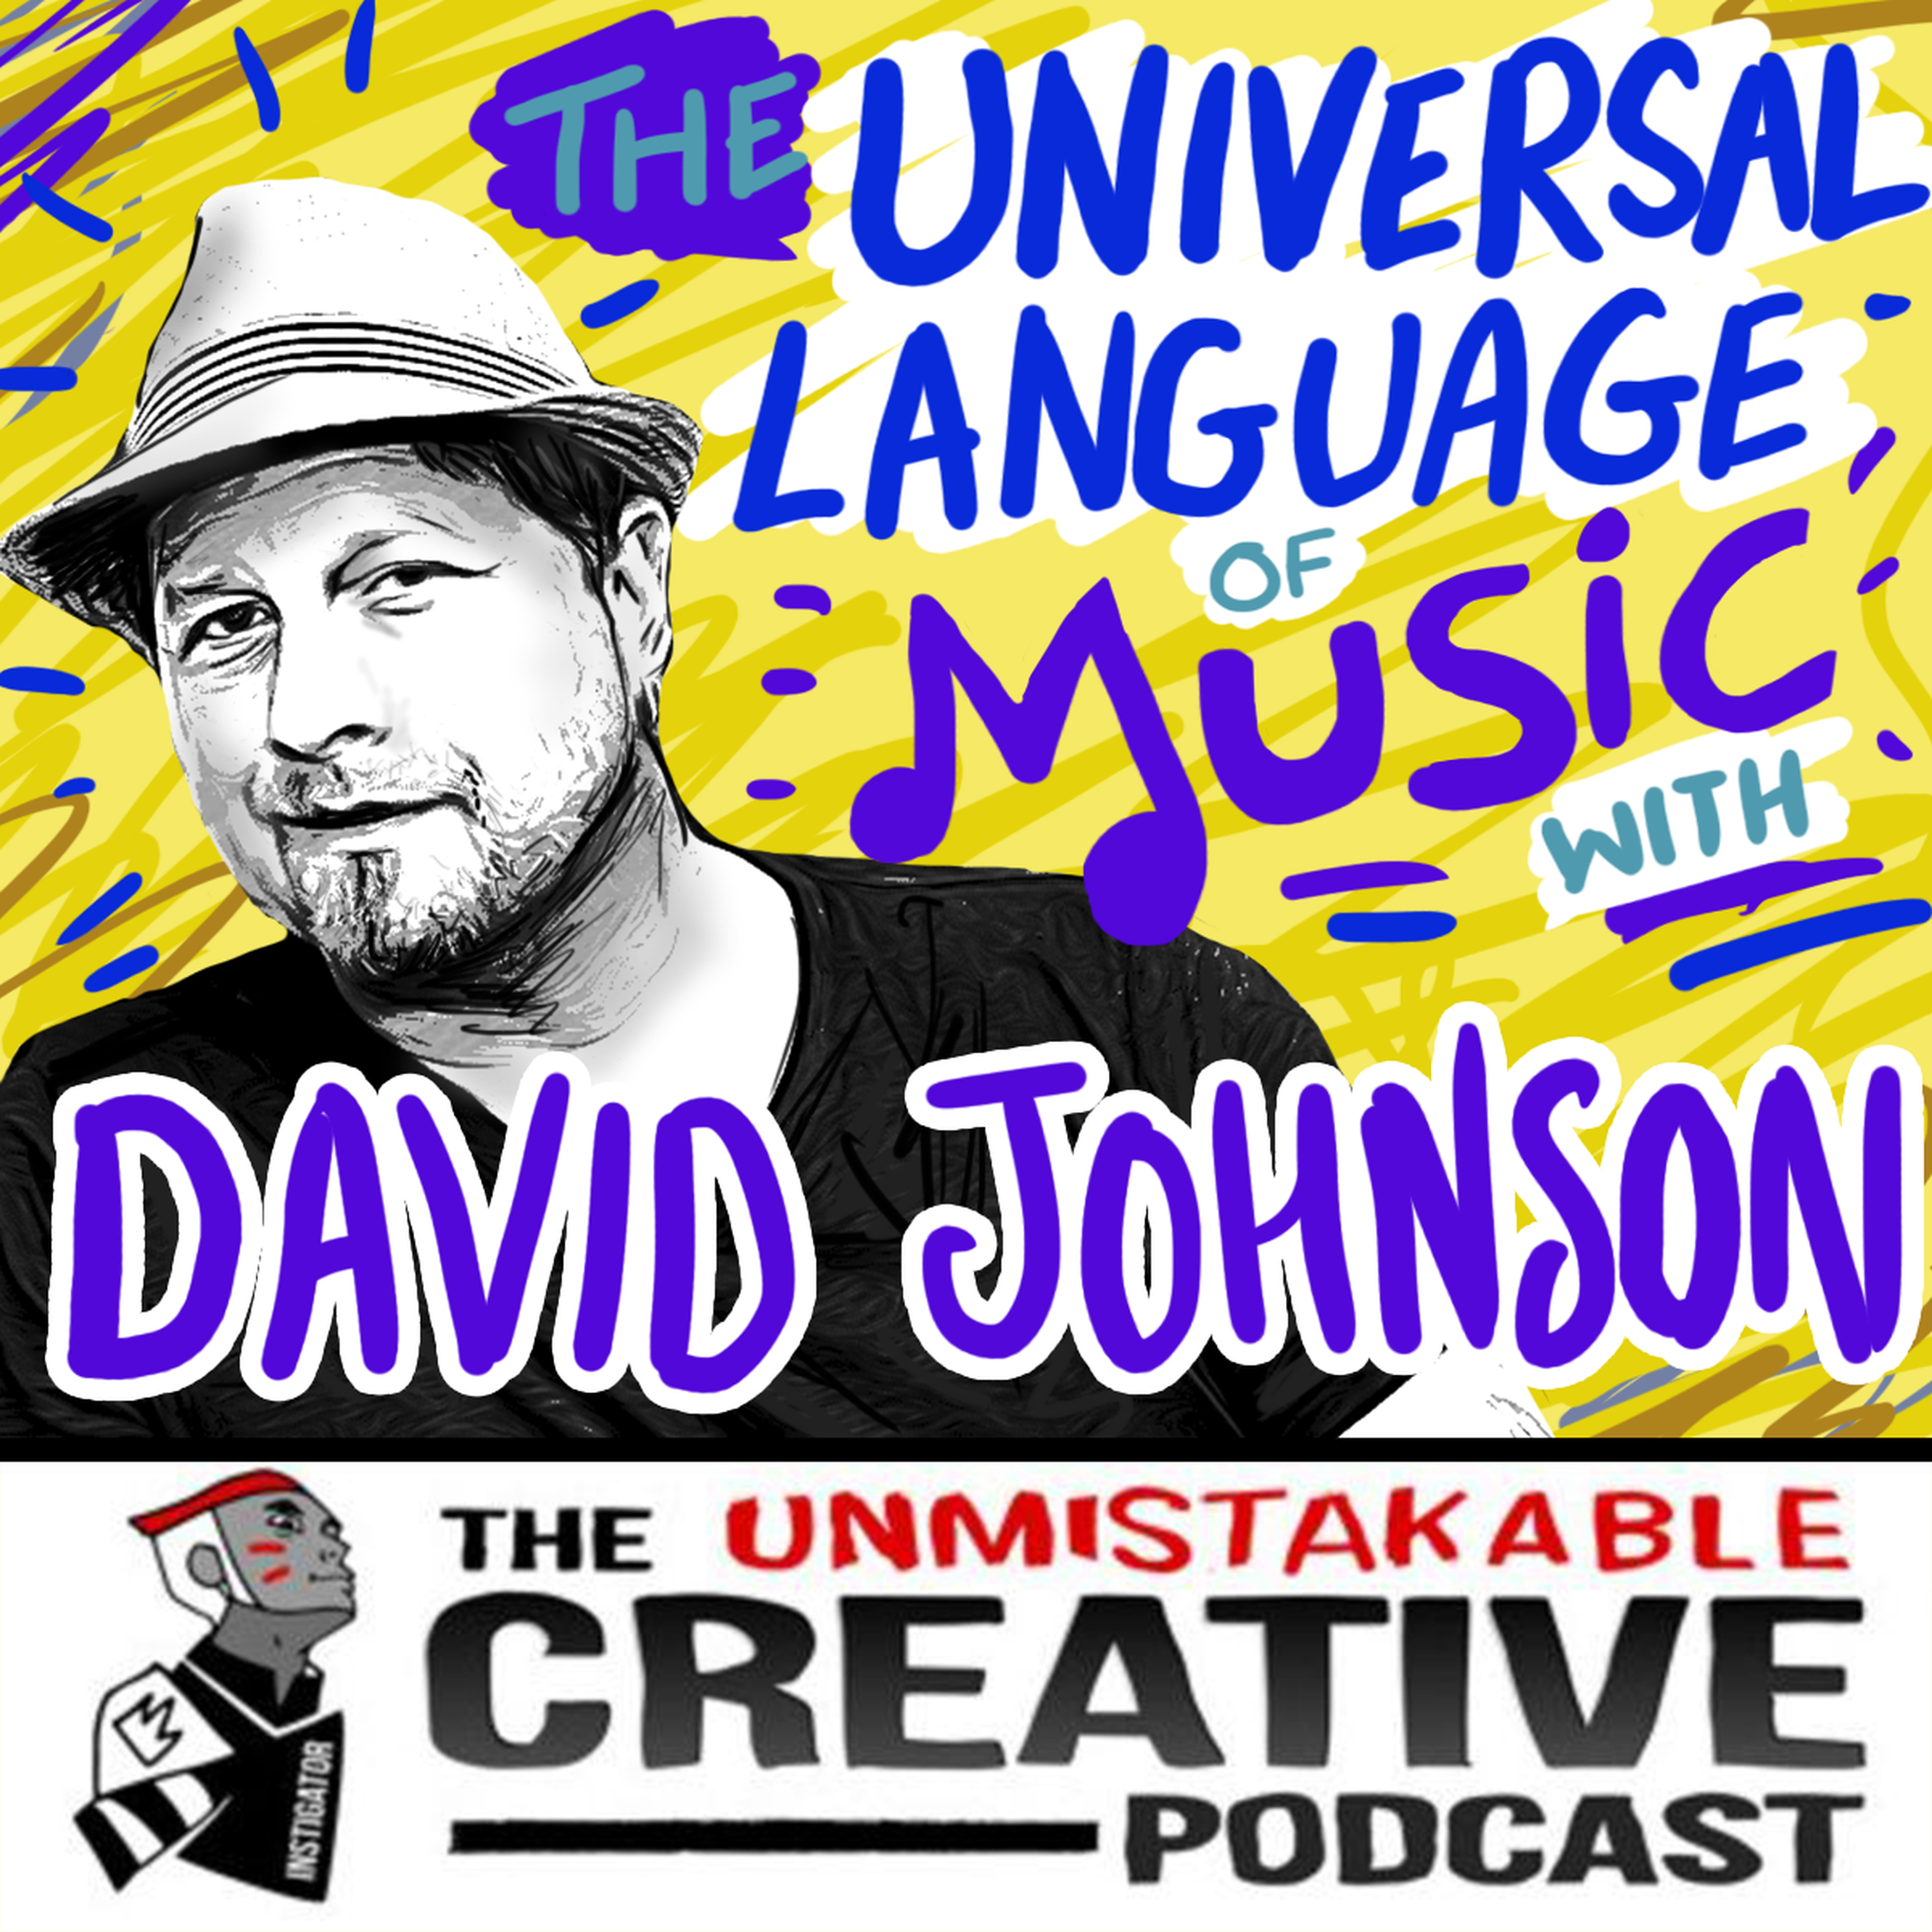 The Universal Language of Music with David Johnson Image